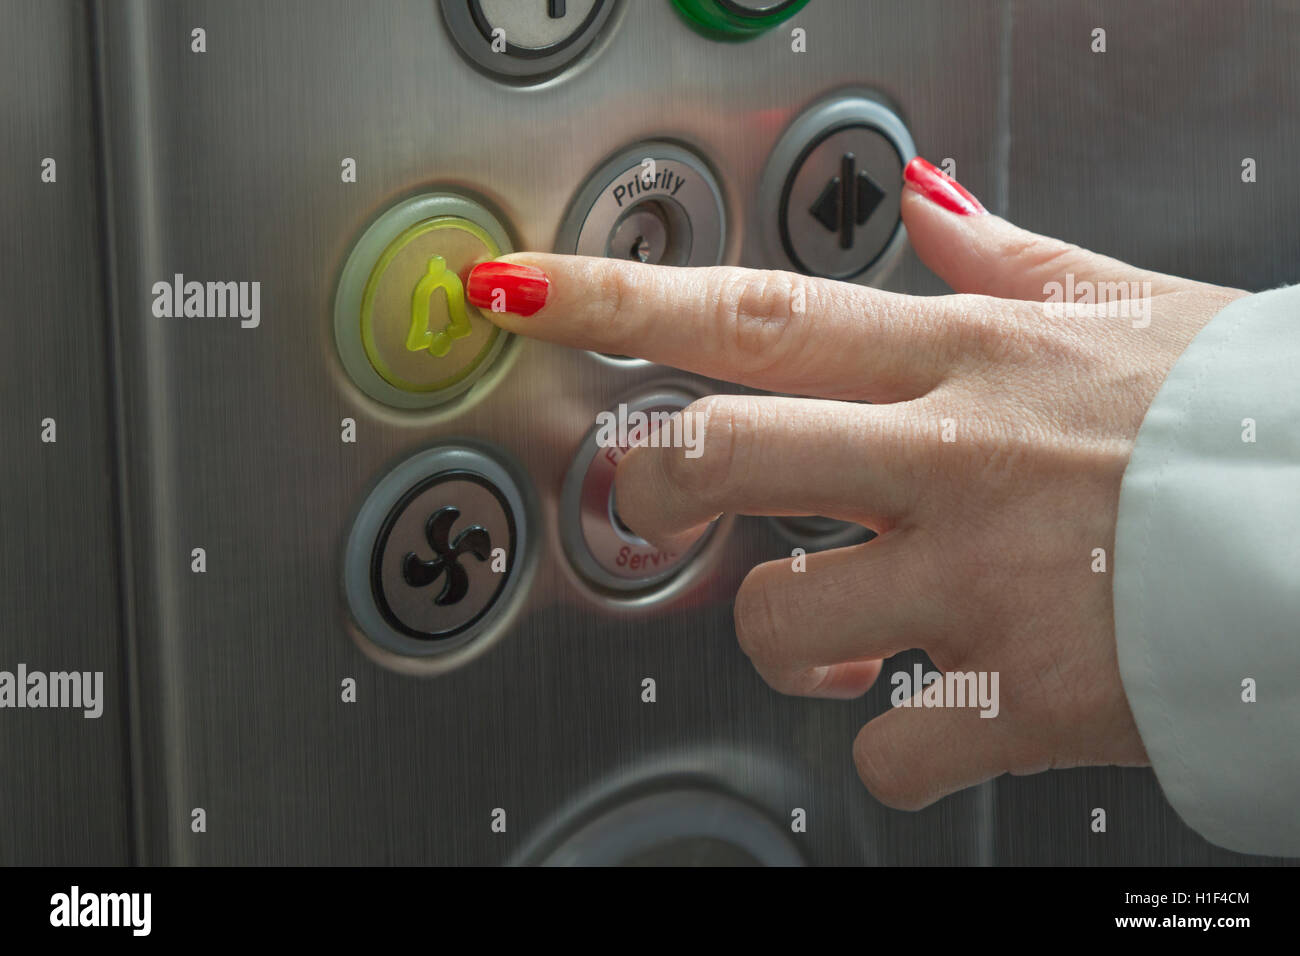 Alarm button in elevator Stock Photo